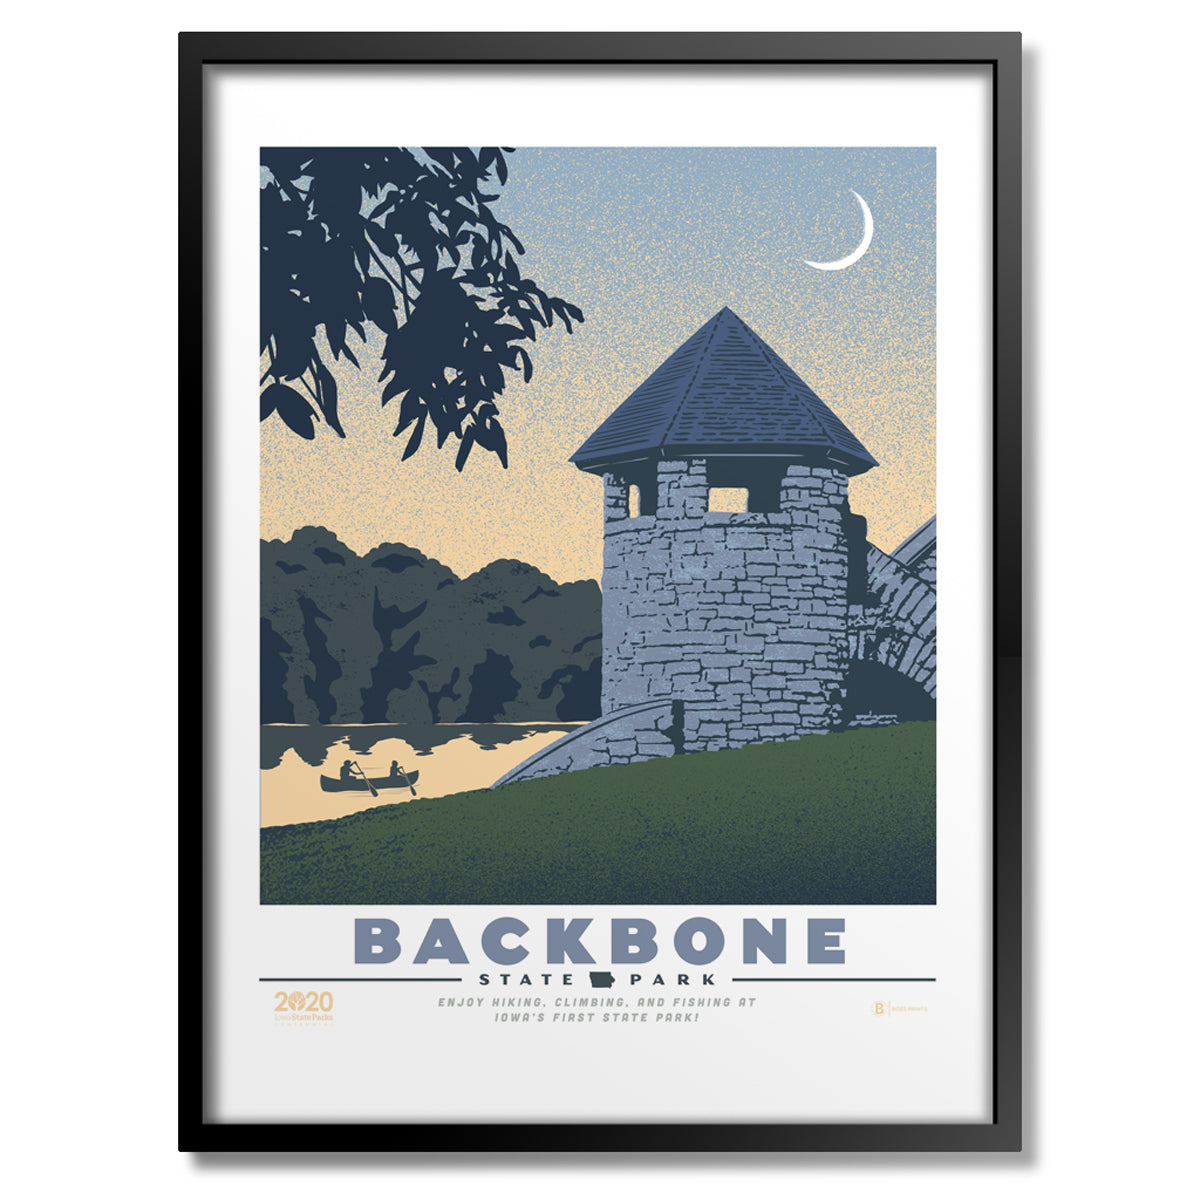 Backbone State Park Print - Bozz Prints